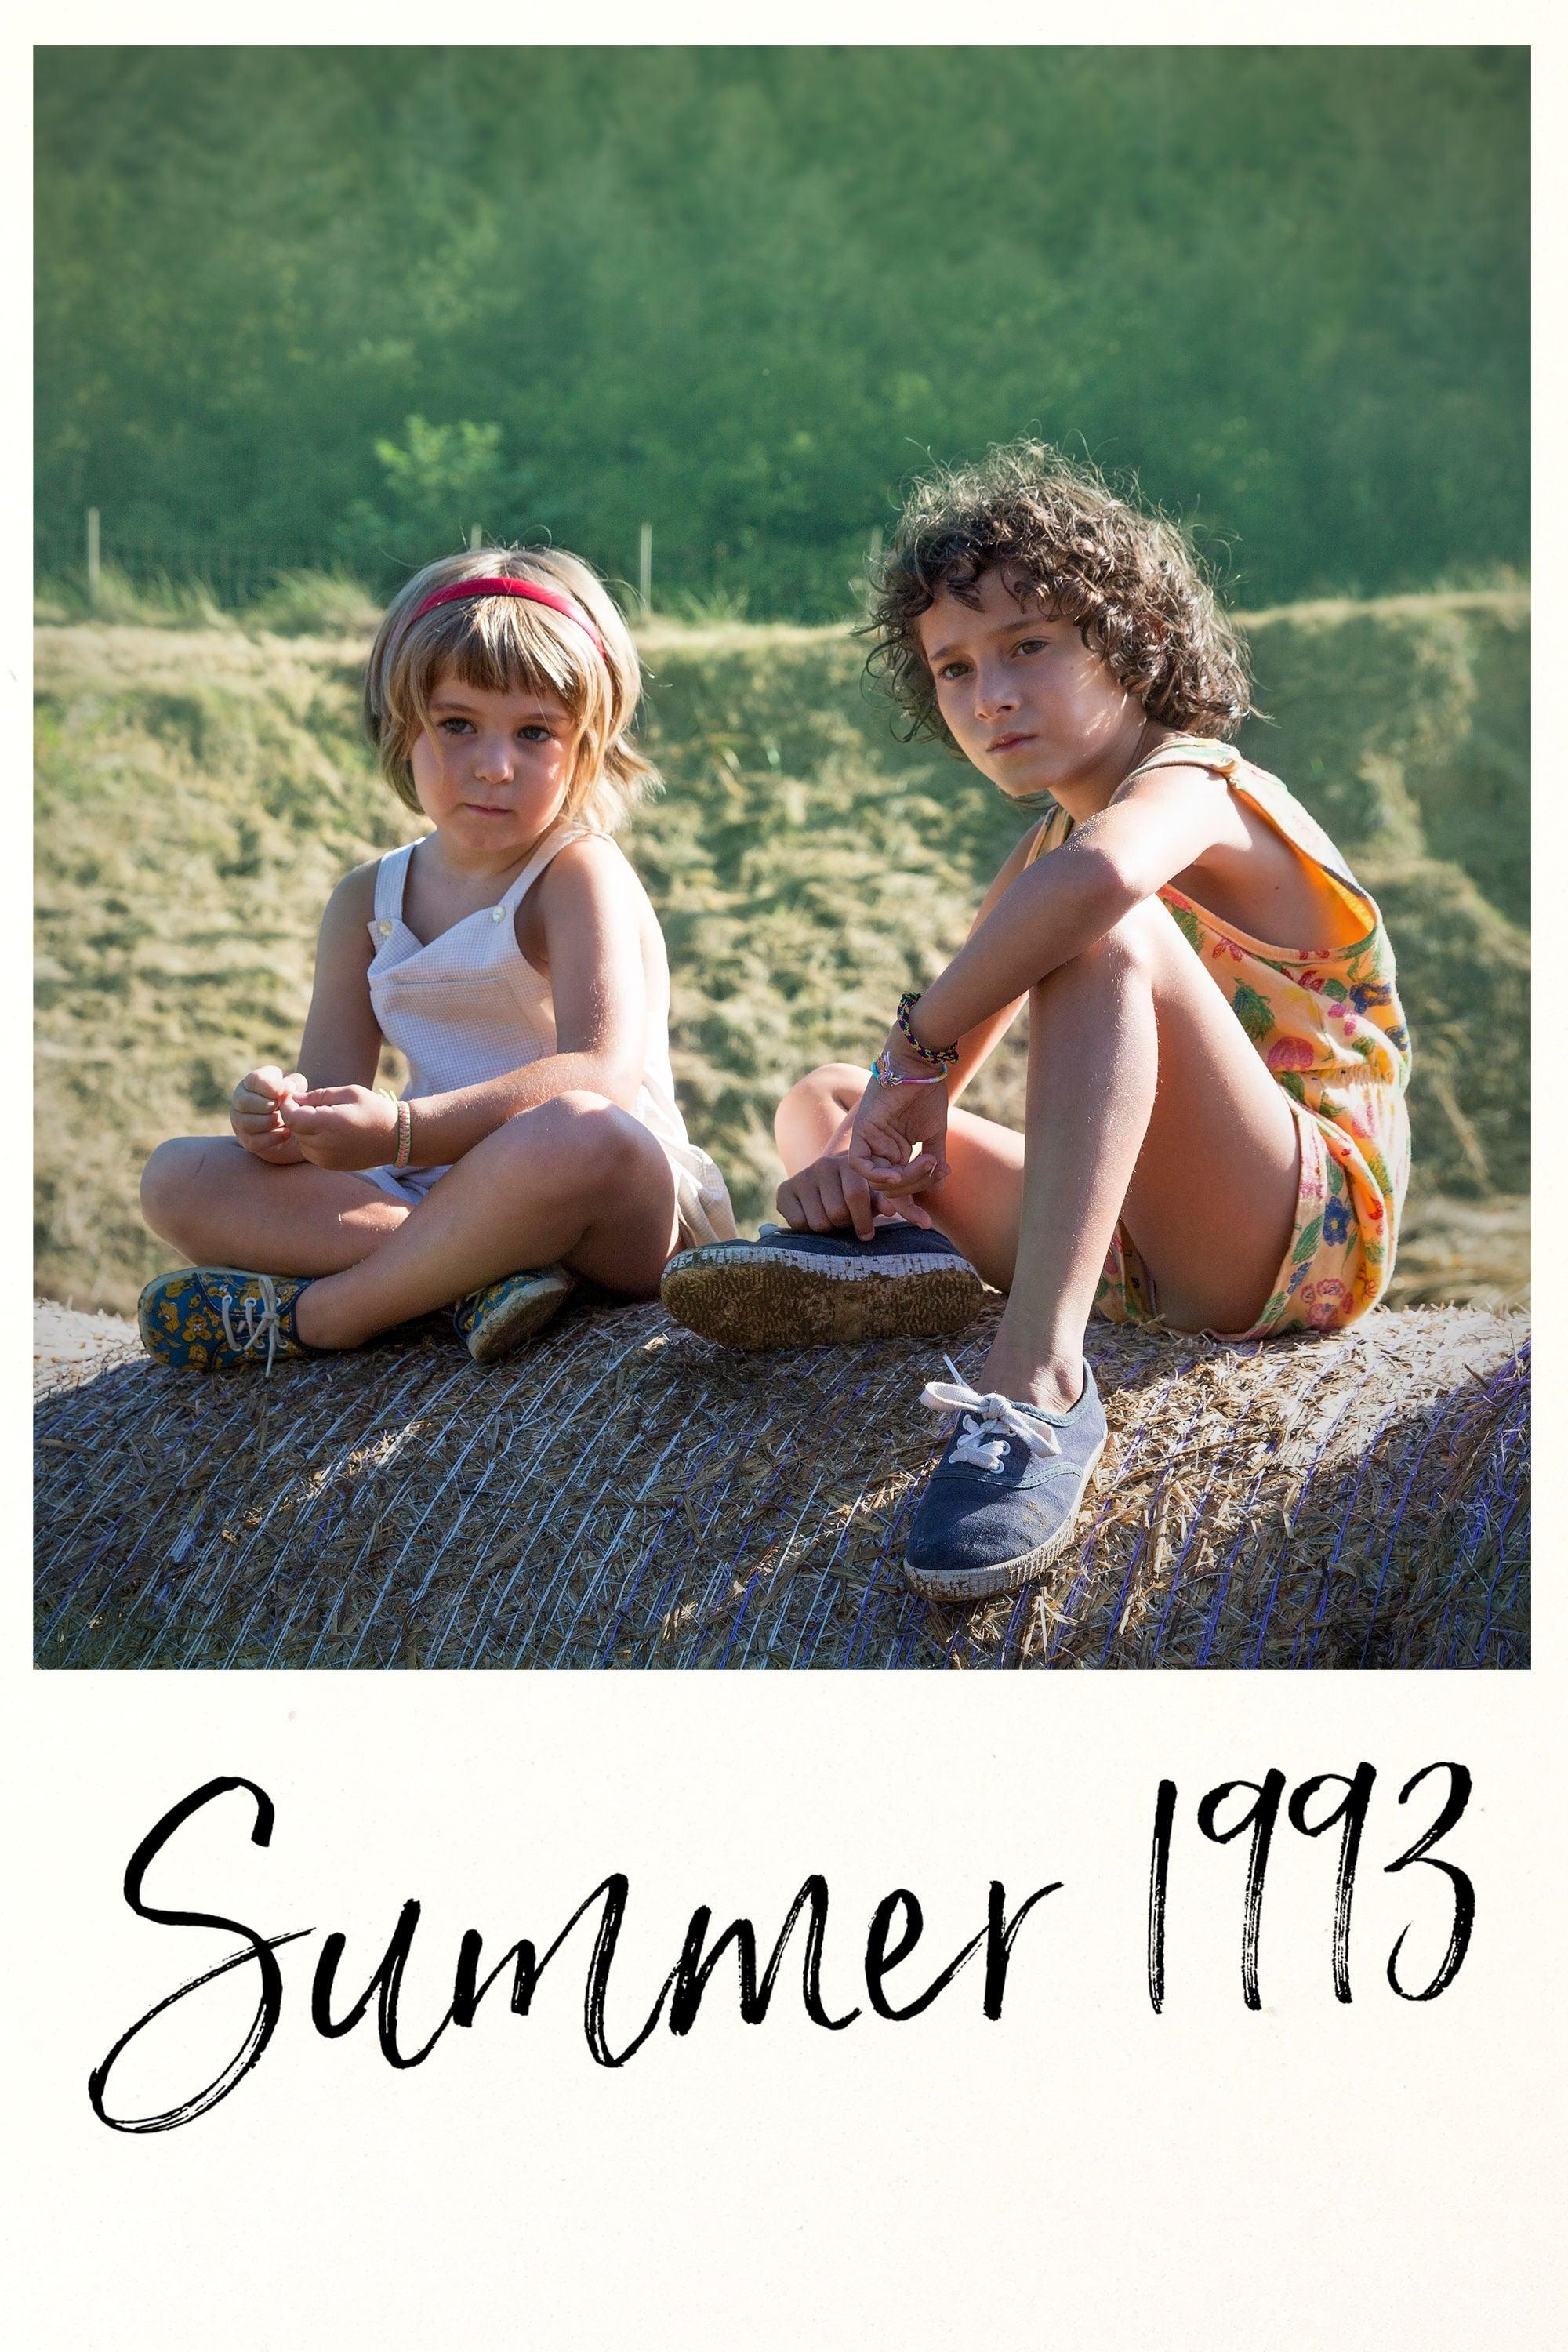 Summer 1993 poster